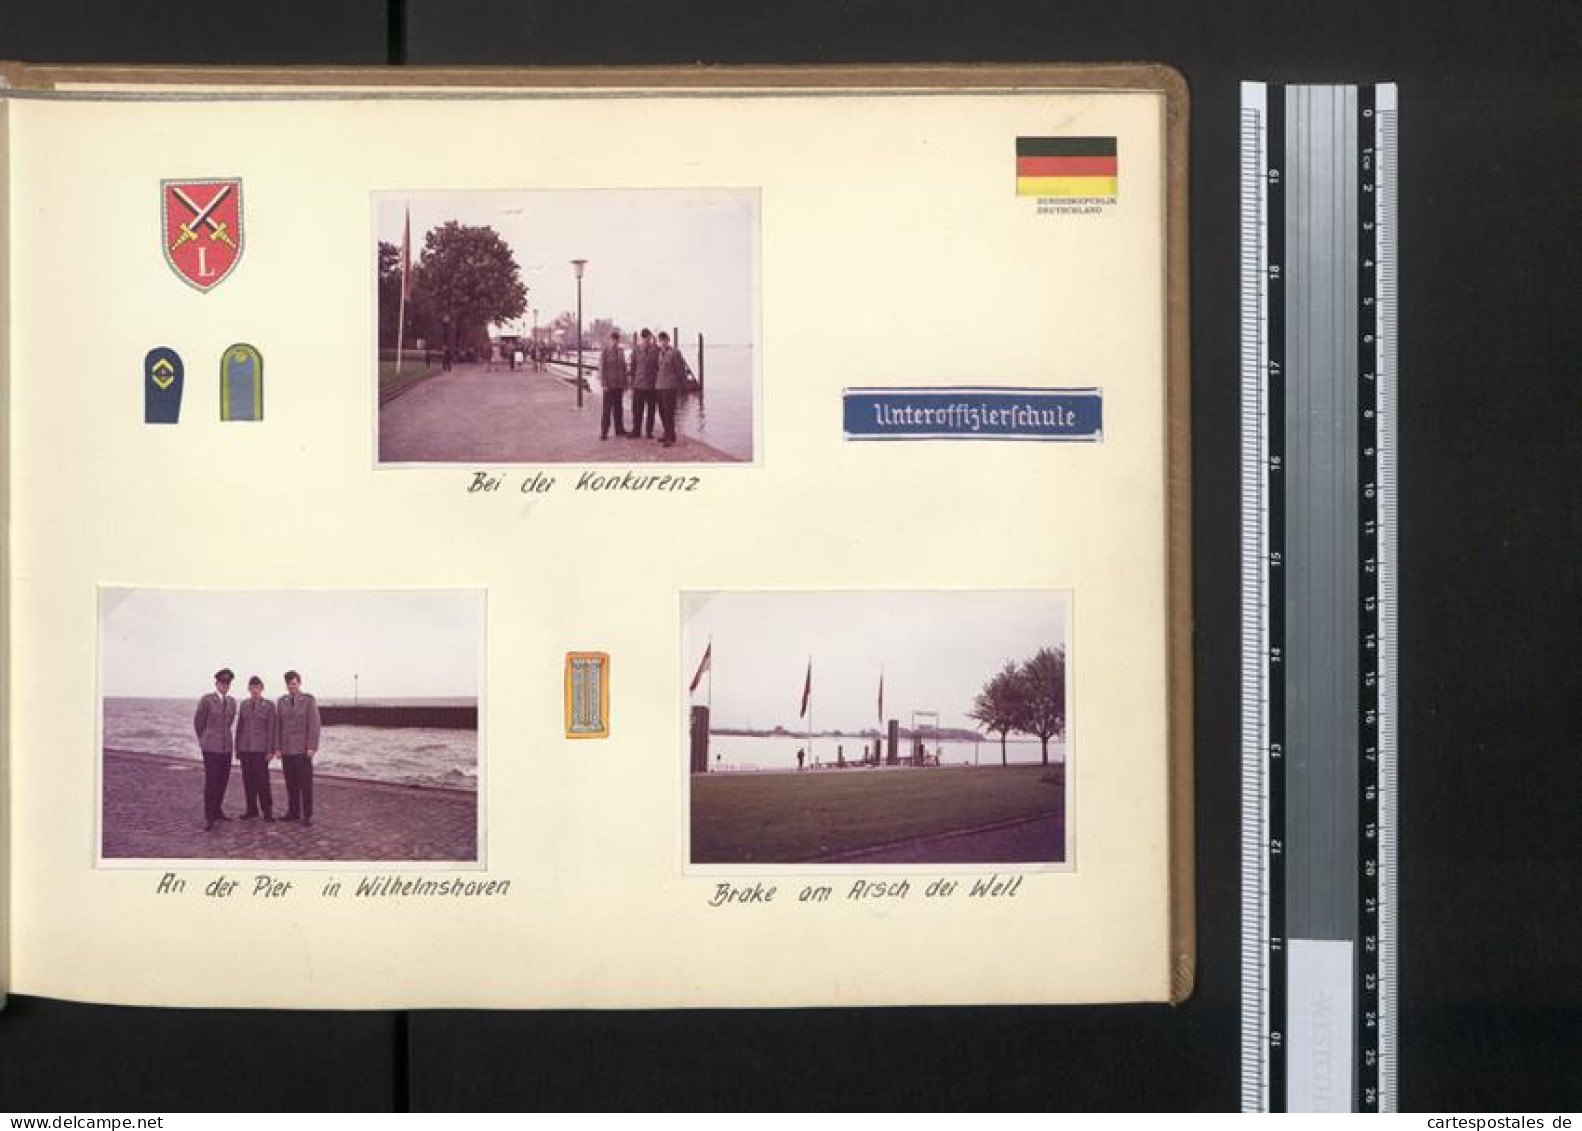 Fotoalbum Mit 67 Fotografien Bundeswehr, Grundausbildung 1969, Panzer, NATO, Jugendlager, Uniform  - Albums & Collections